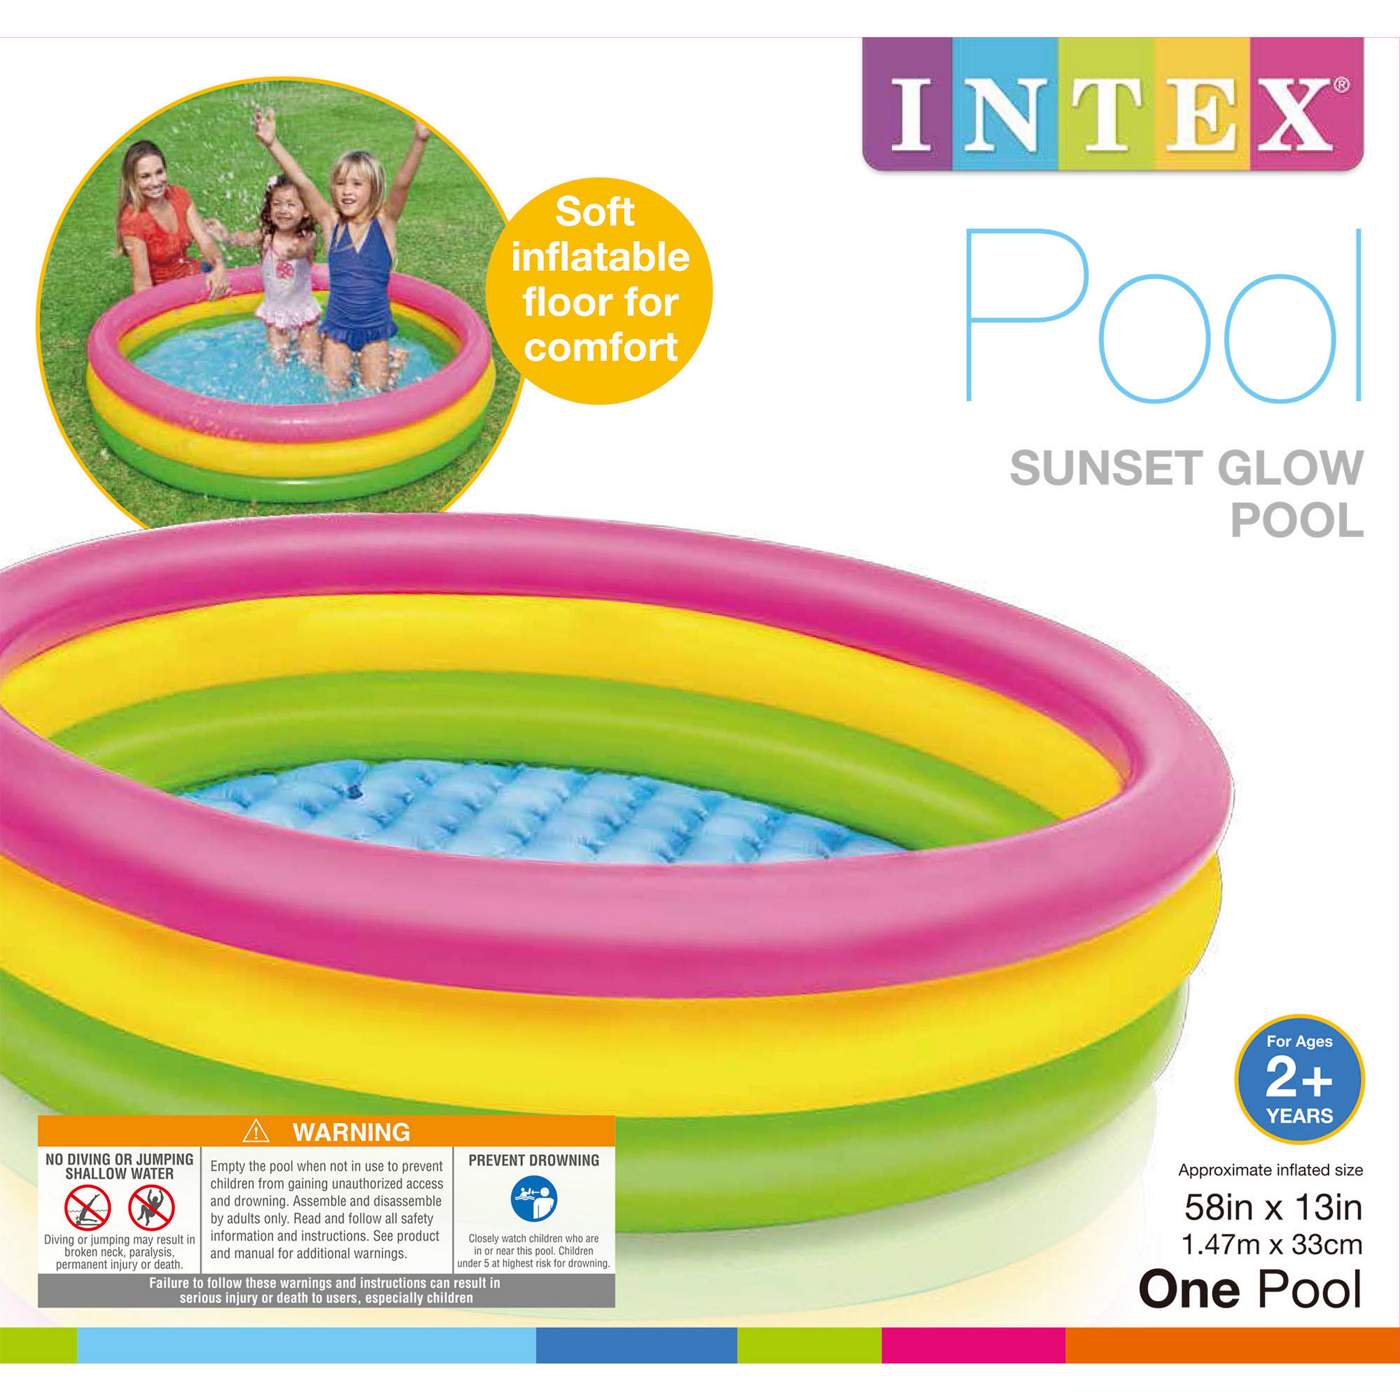 Intex Sunset Glow Kiddie Pool - Shop Kiddie Pools at H-E-B